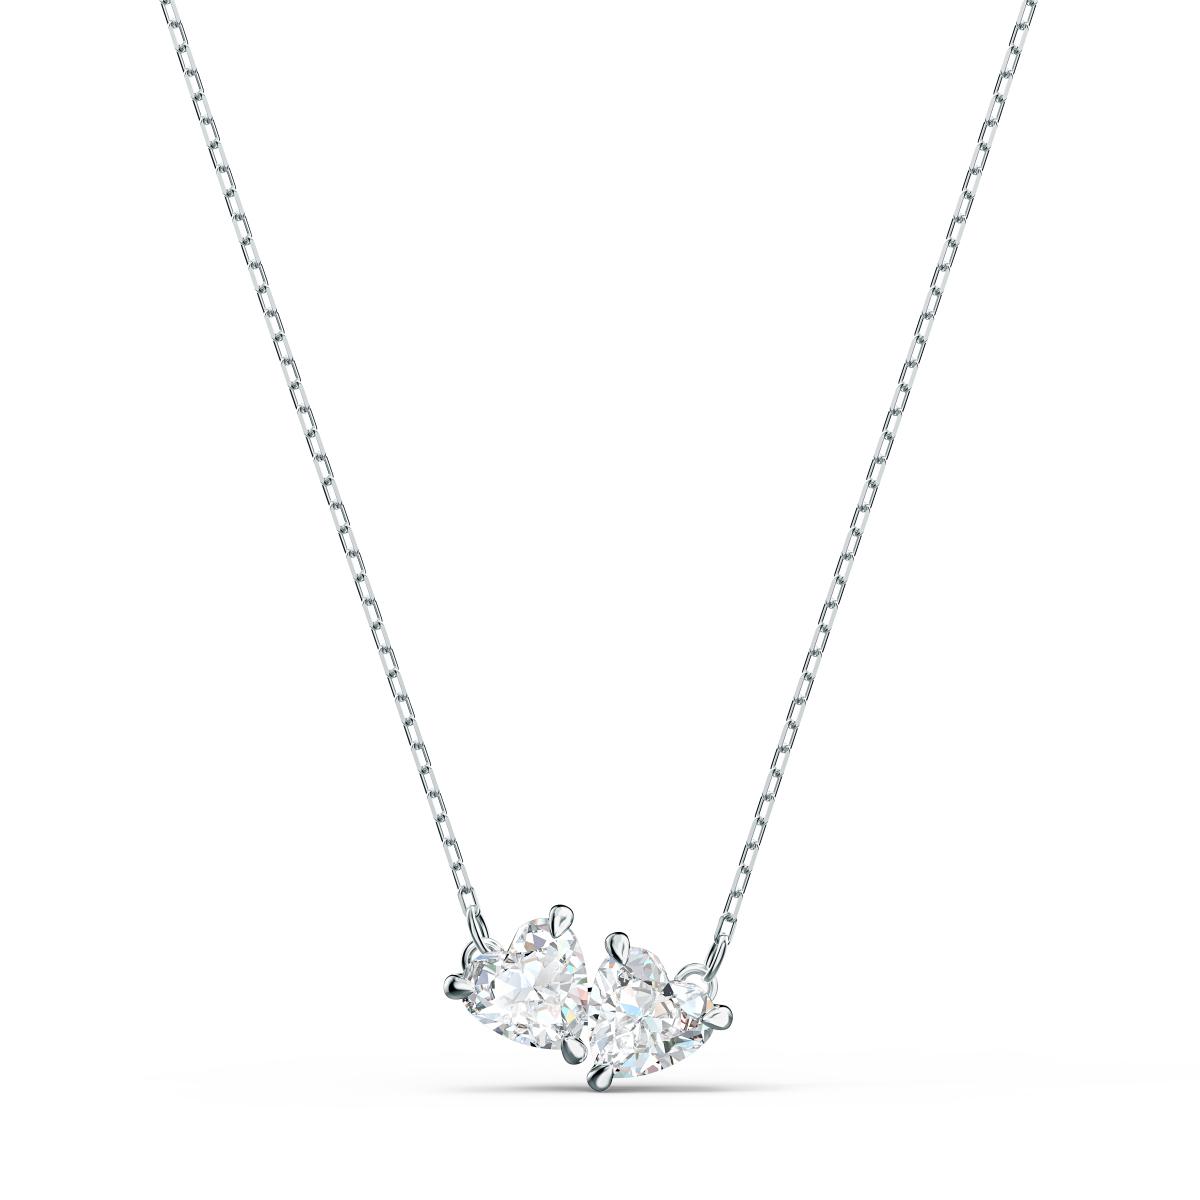 Collier Swarovski 5517117 - Collier métal rhodié blanc cristaux sertis Femme